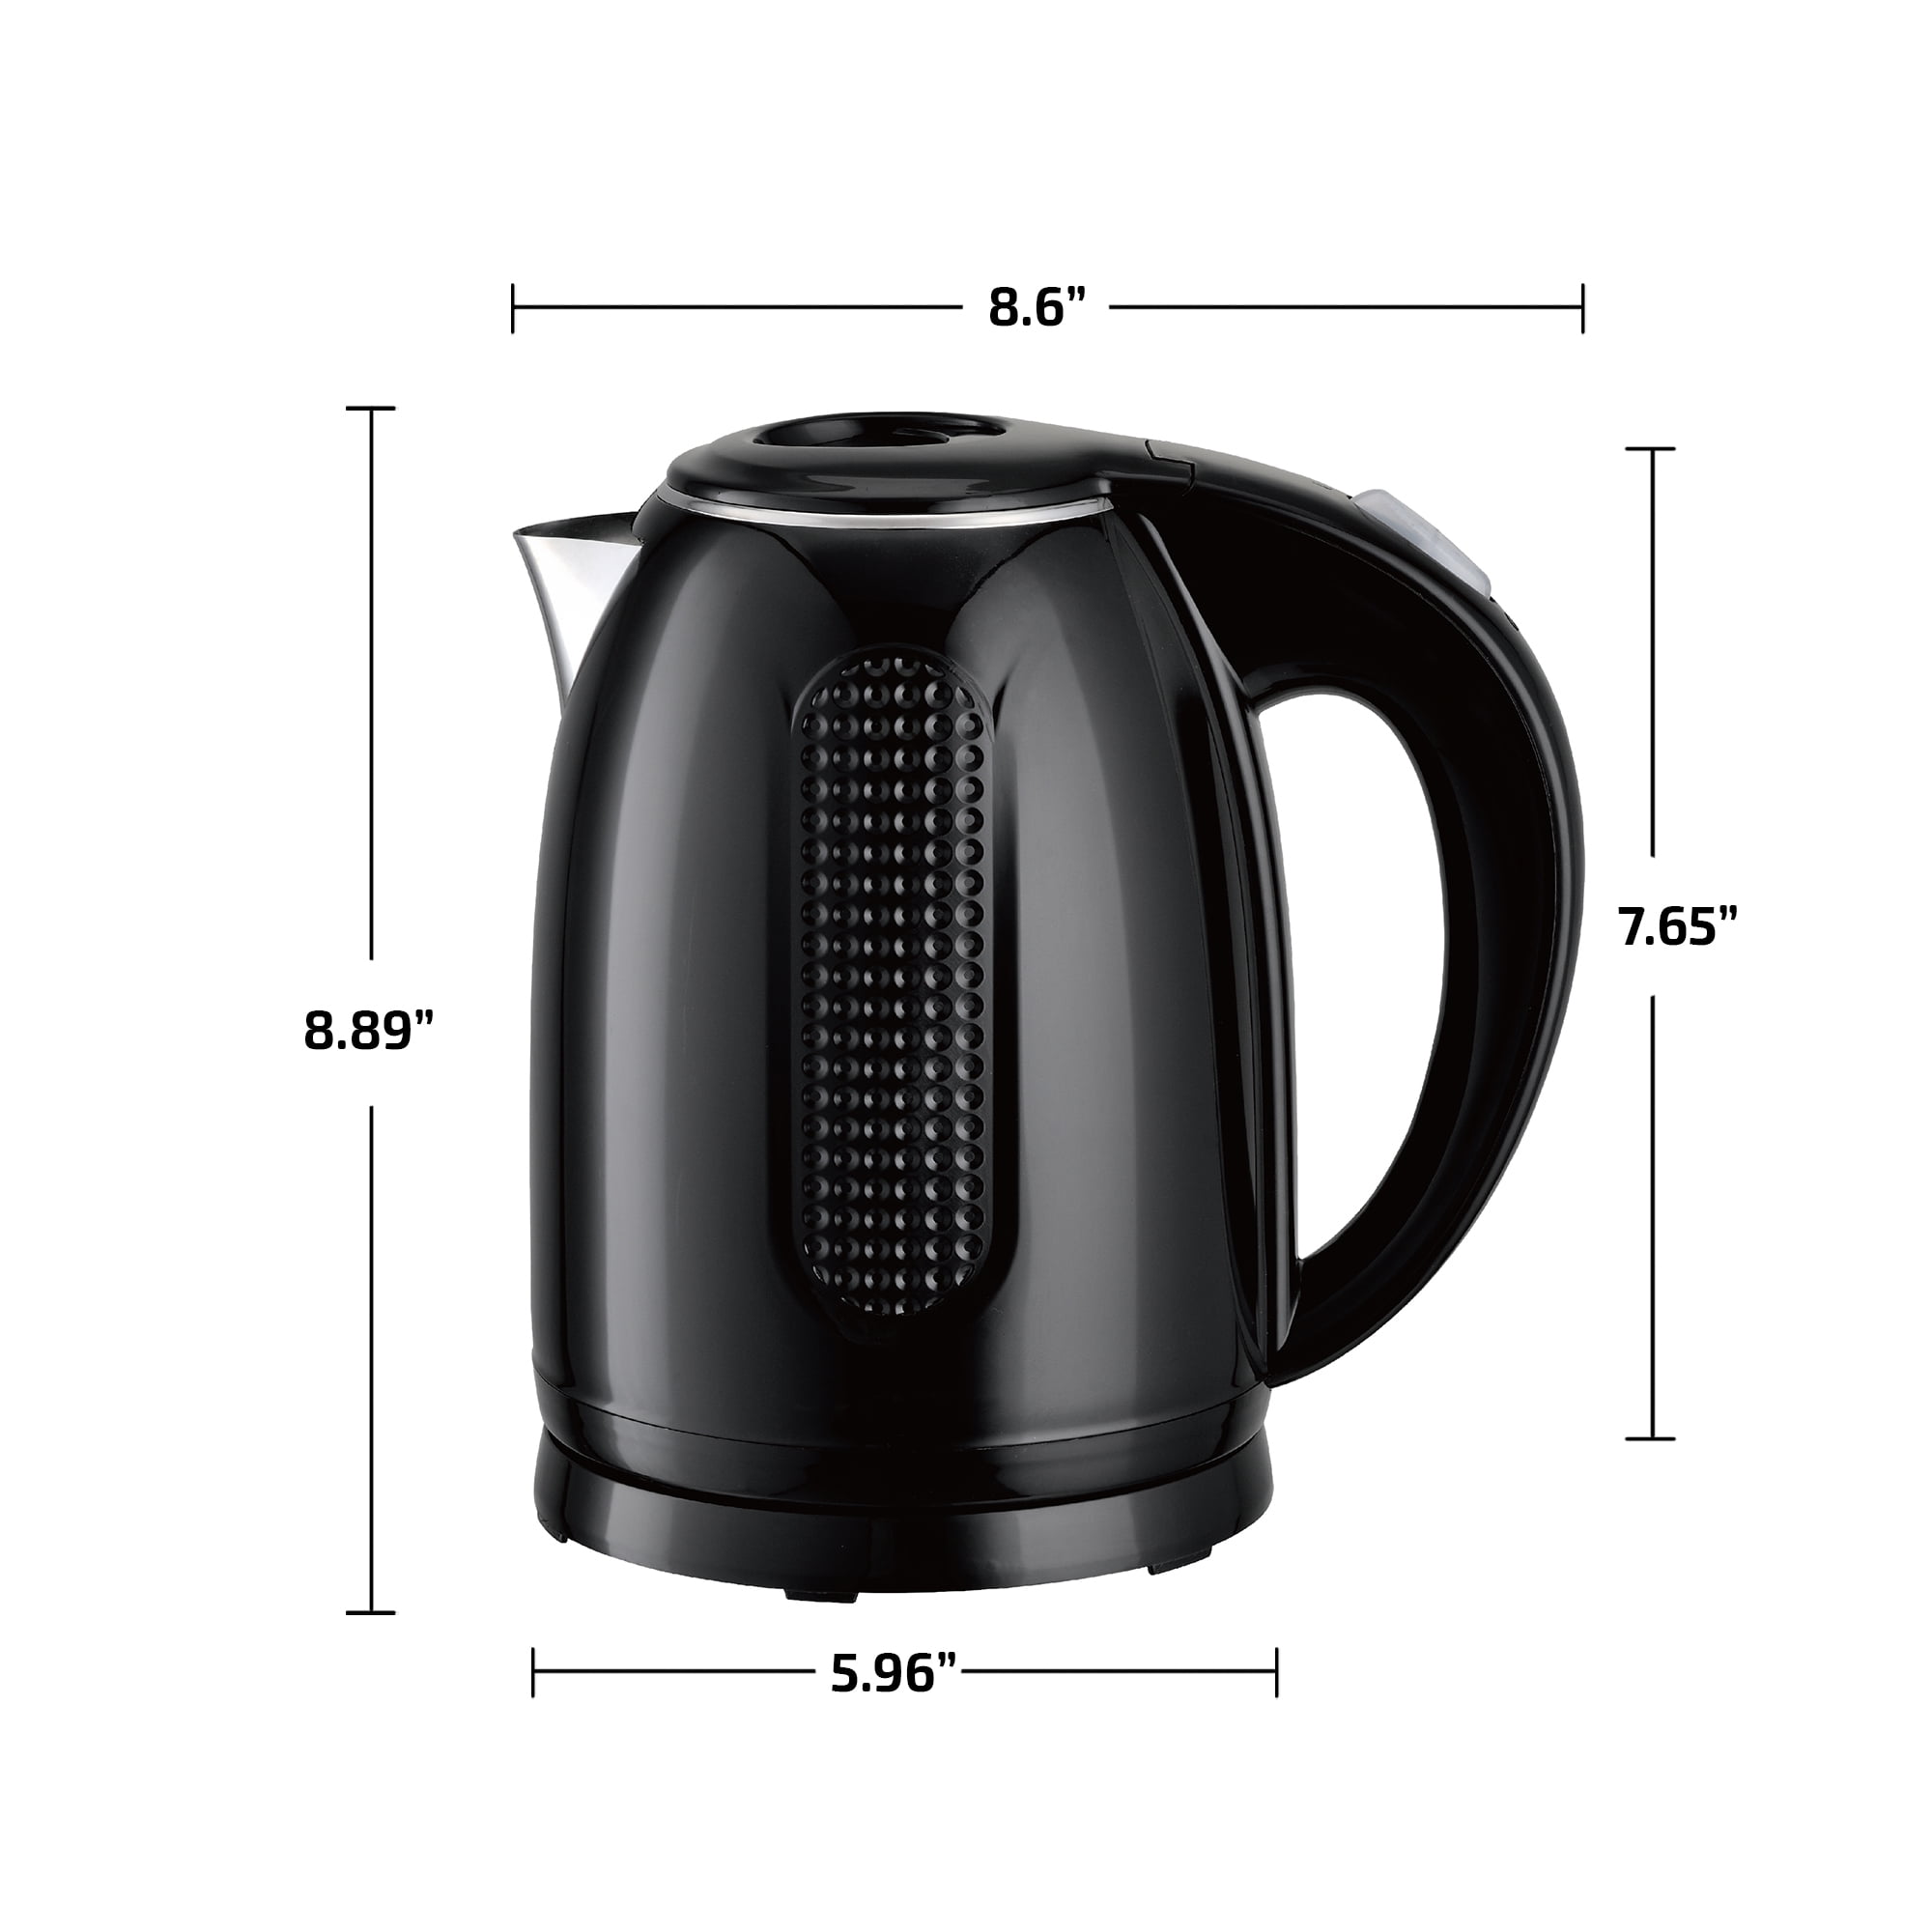 OVENTE Electric Kettle Instant Hot Water Boiler, Automatic Shutoff,  Coffee/Tea Maker, Black KS777B